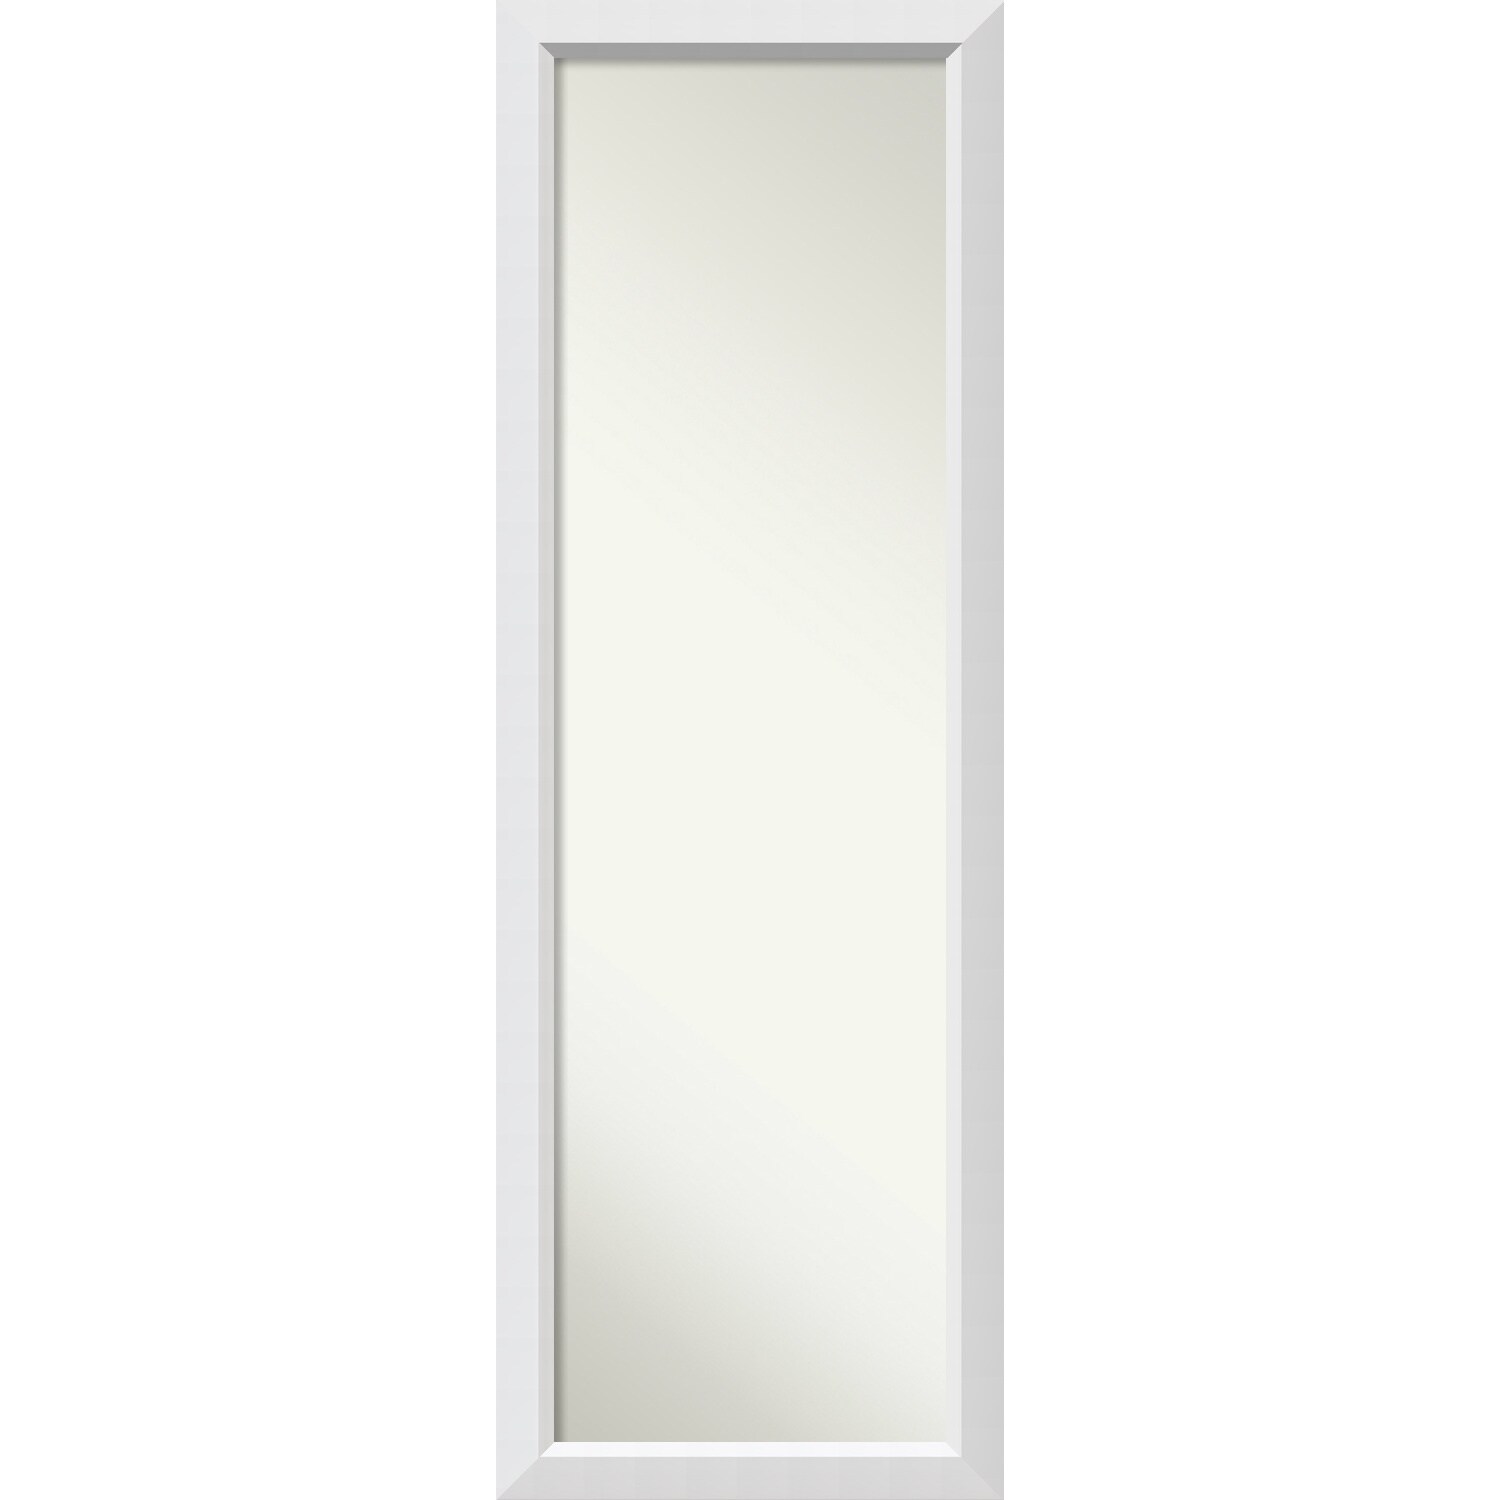 Wall Mirror, Blanco White 18 x 52-inch 